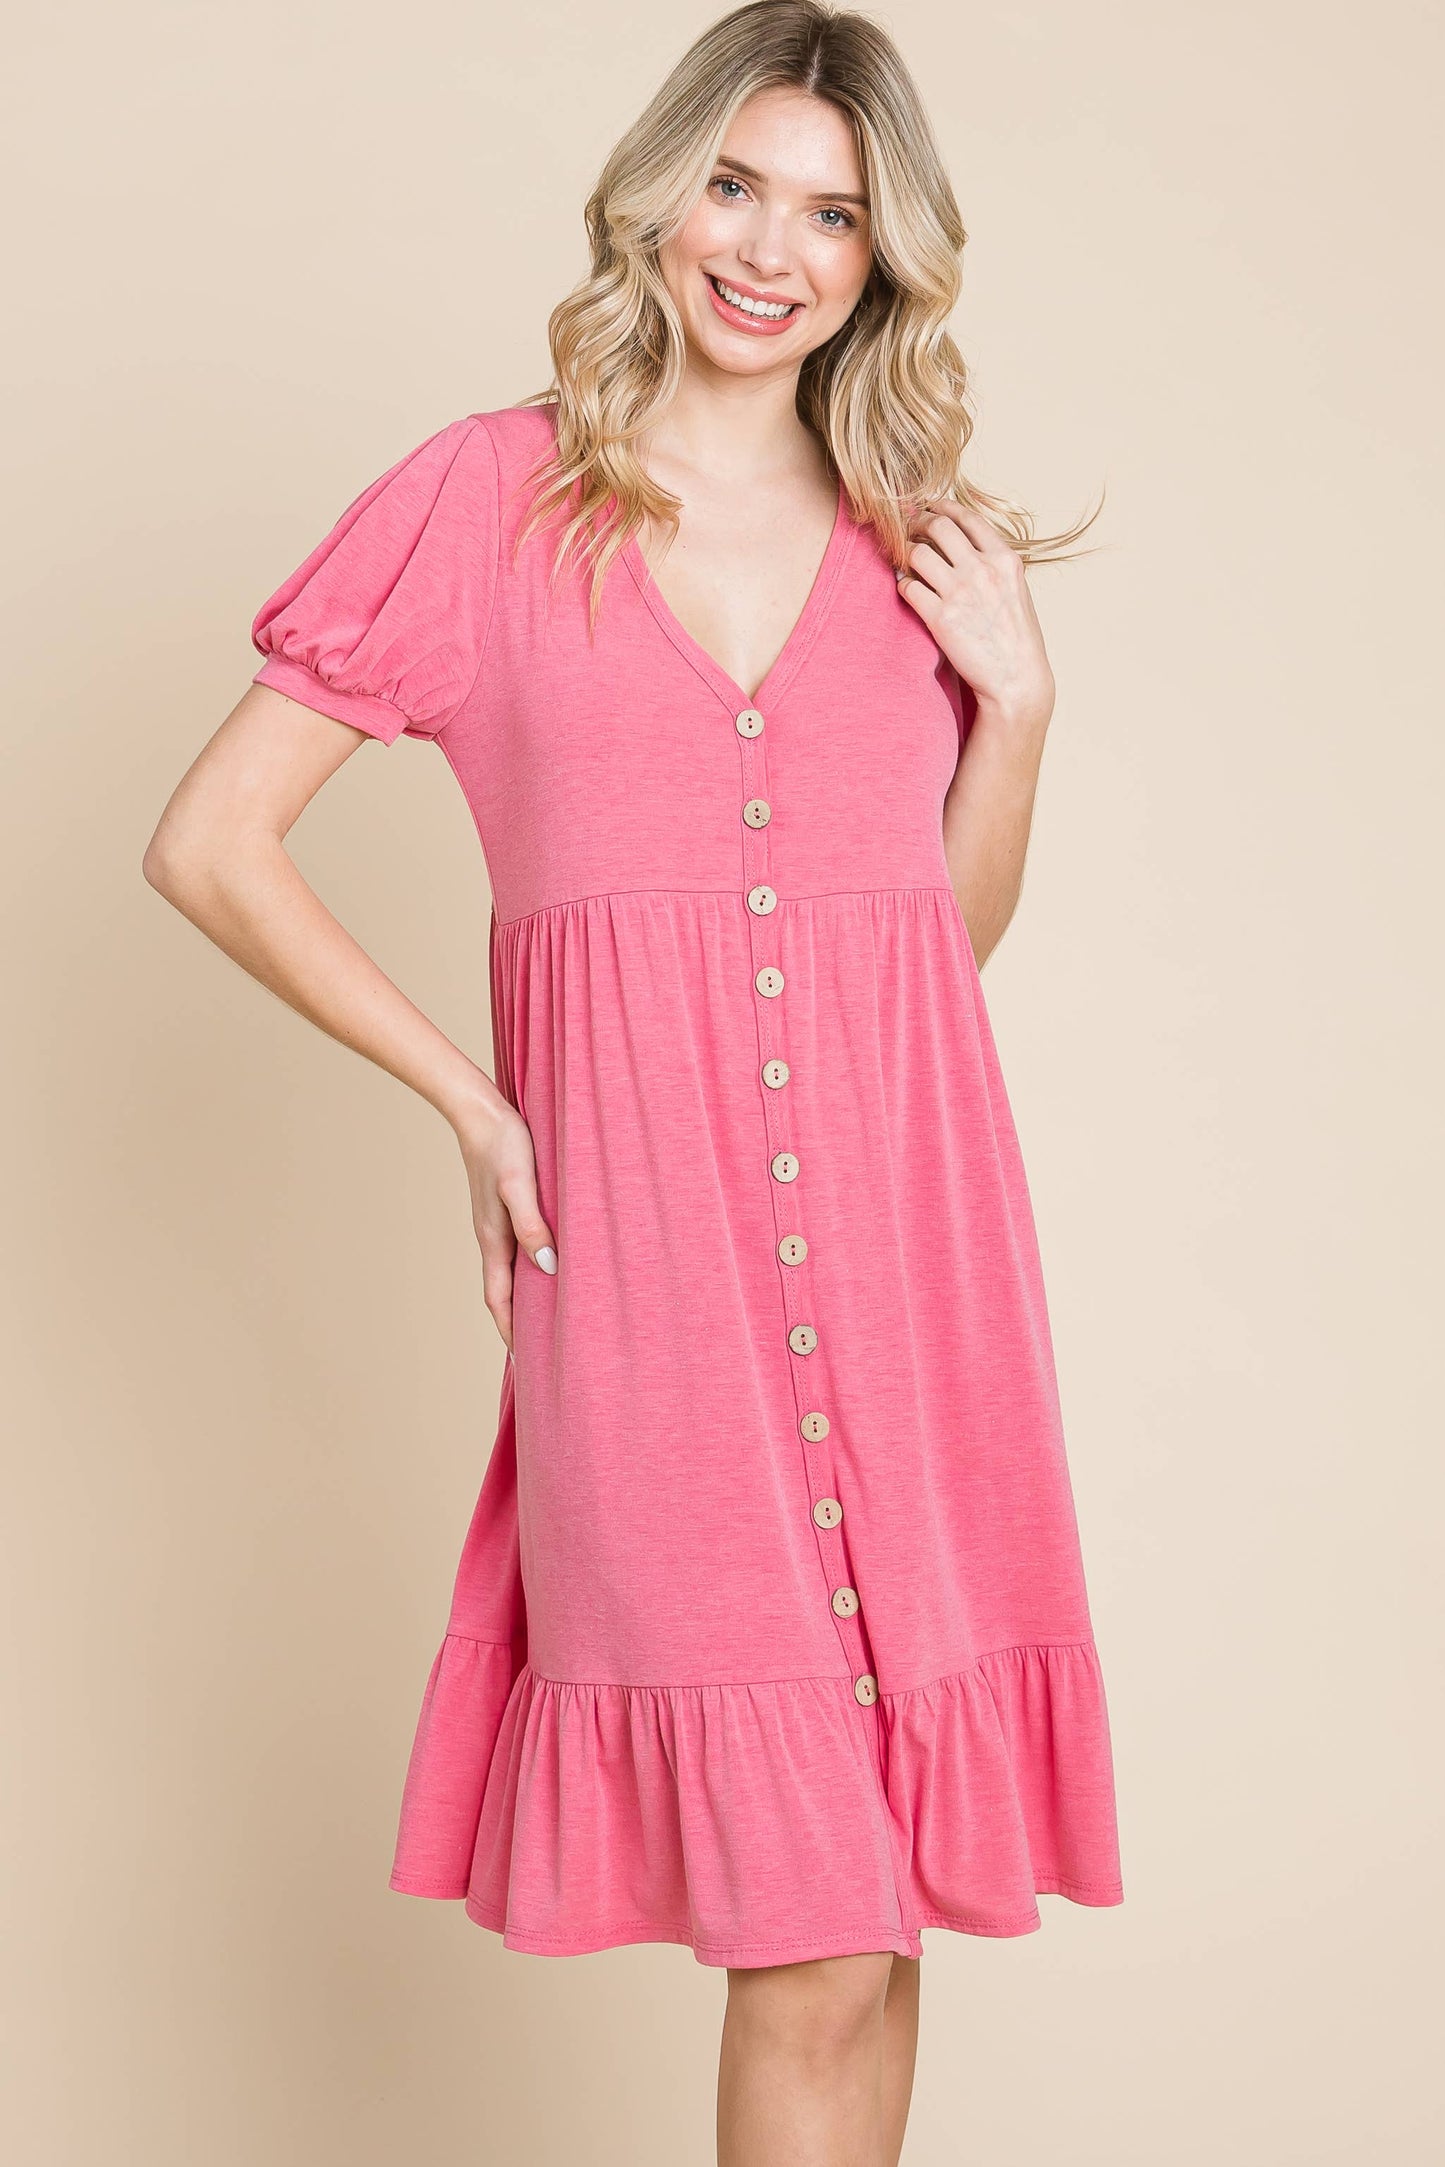 Coral Pink Vneck Button Dress